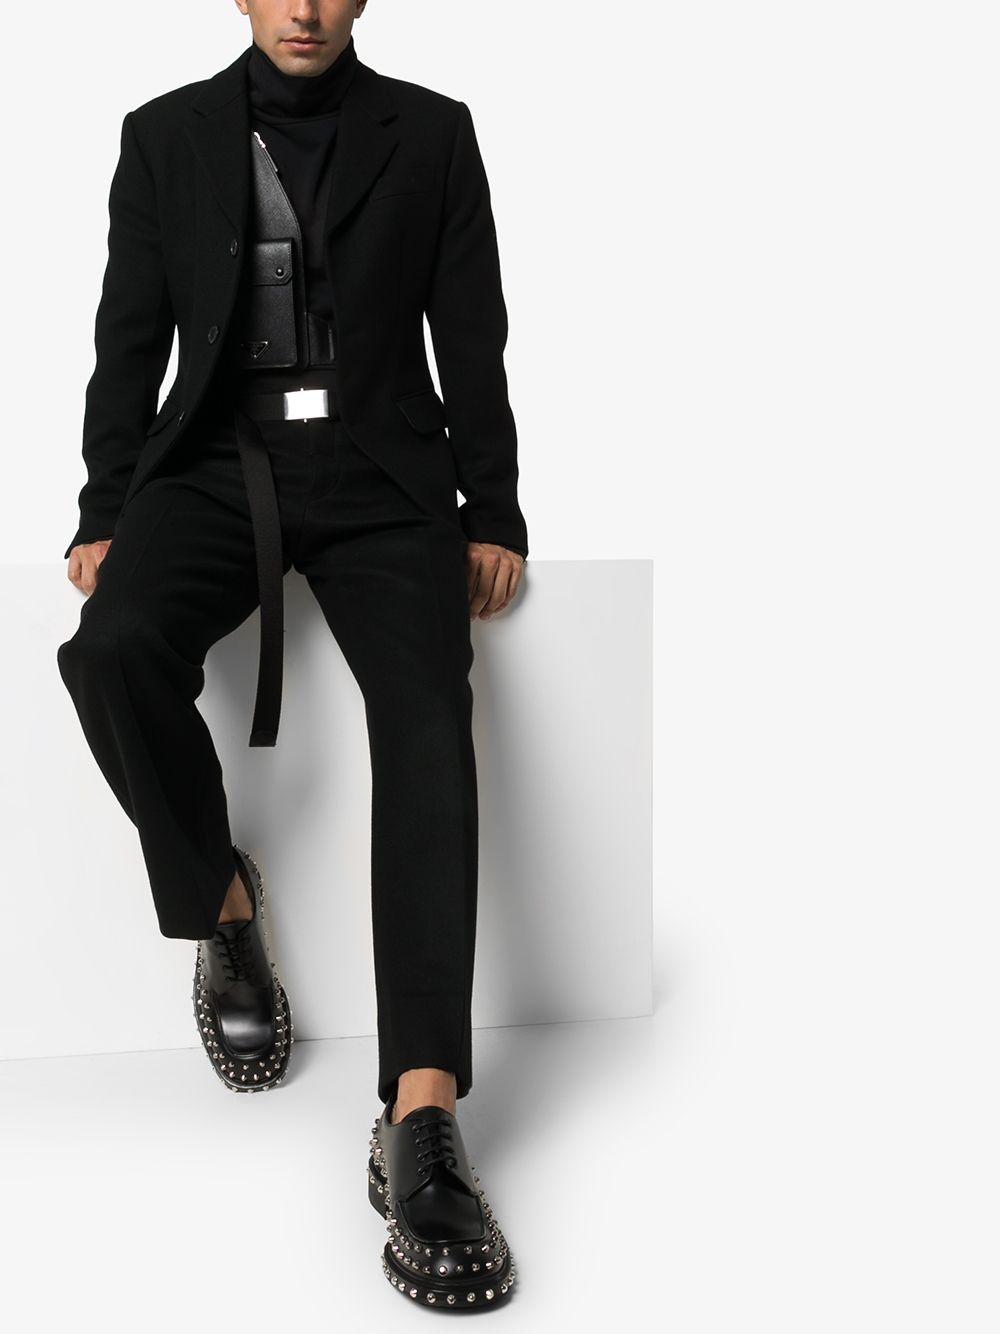 Prada Studded Derby Shoes in Black for Men - Lyst